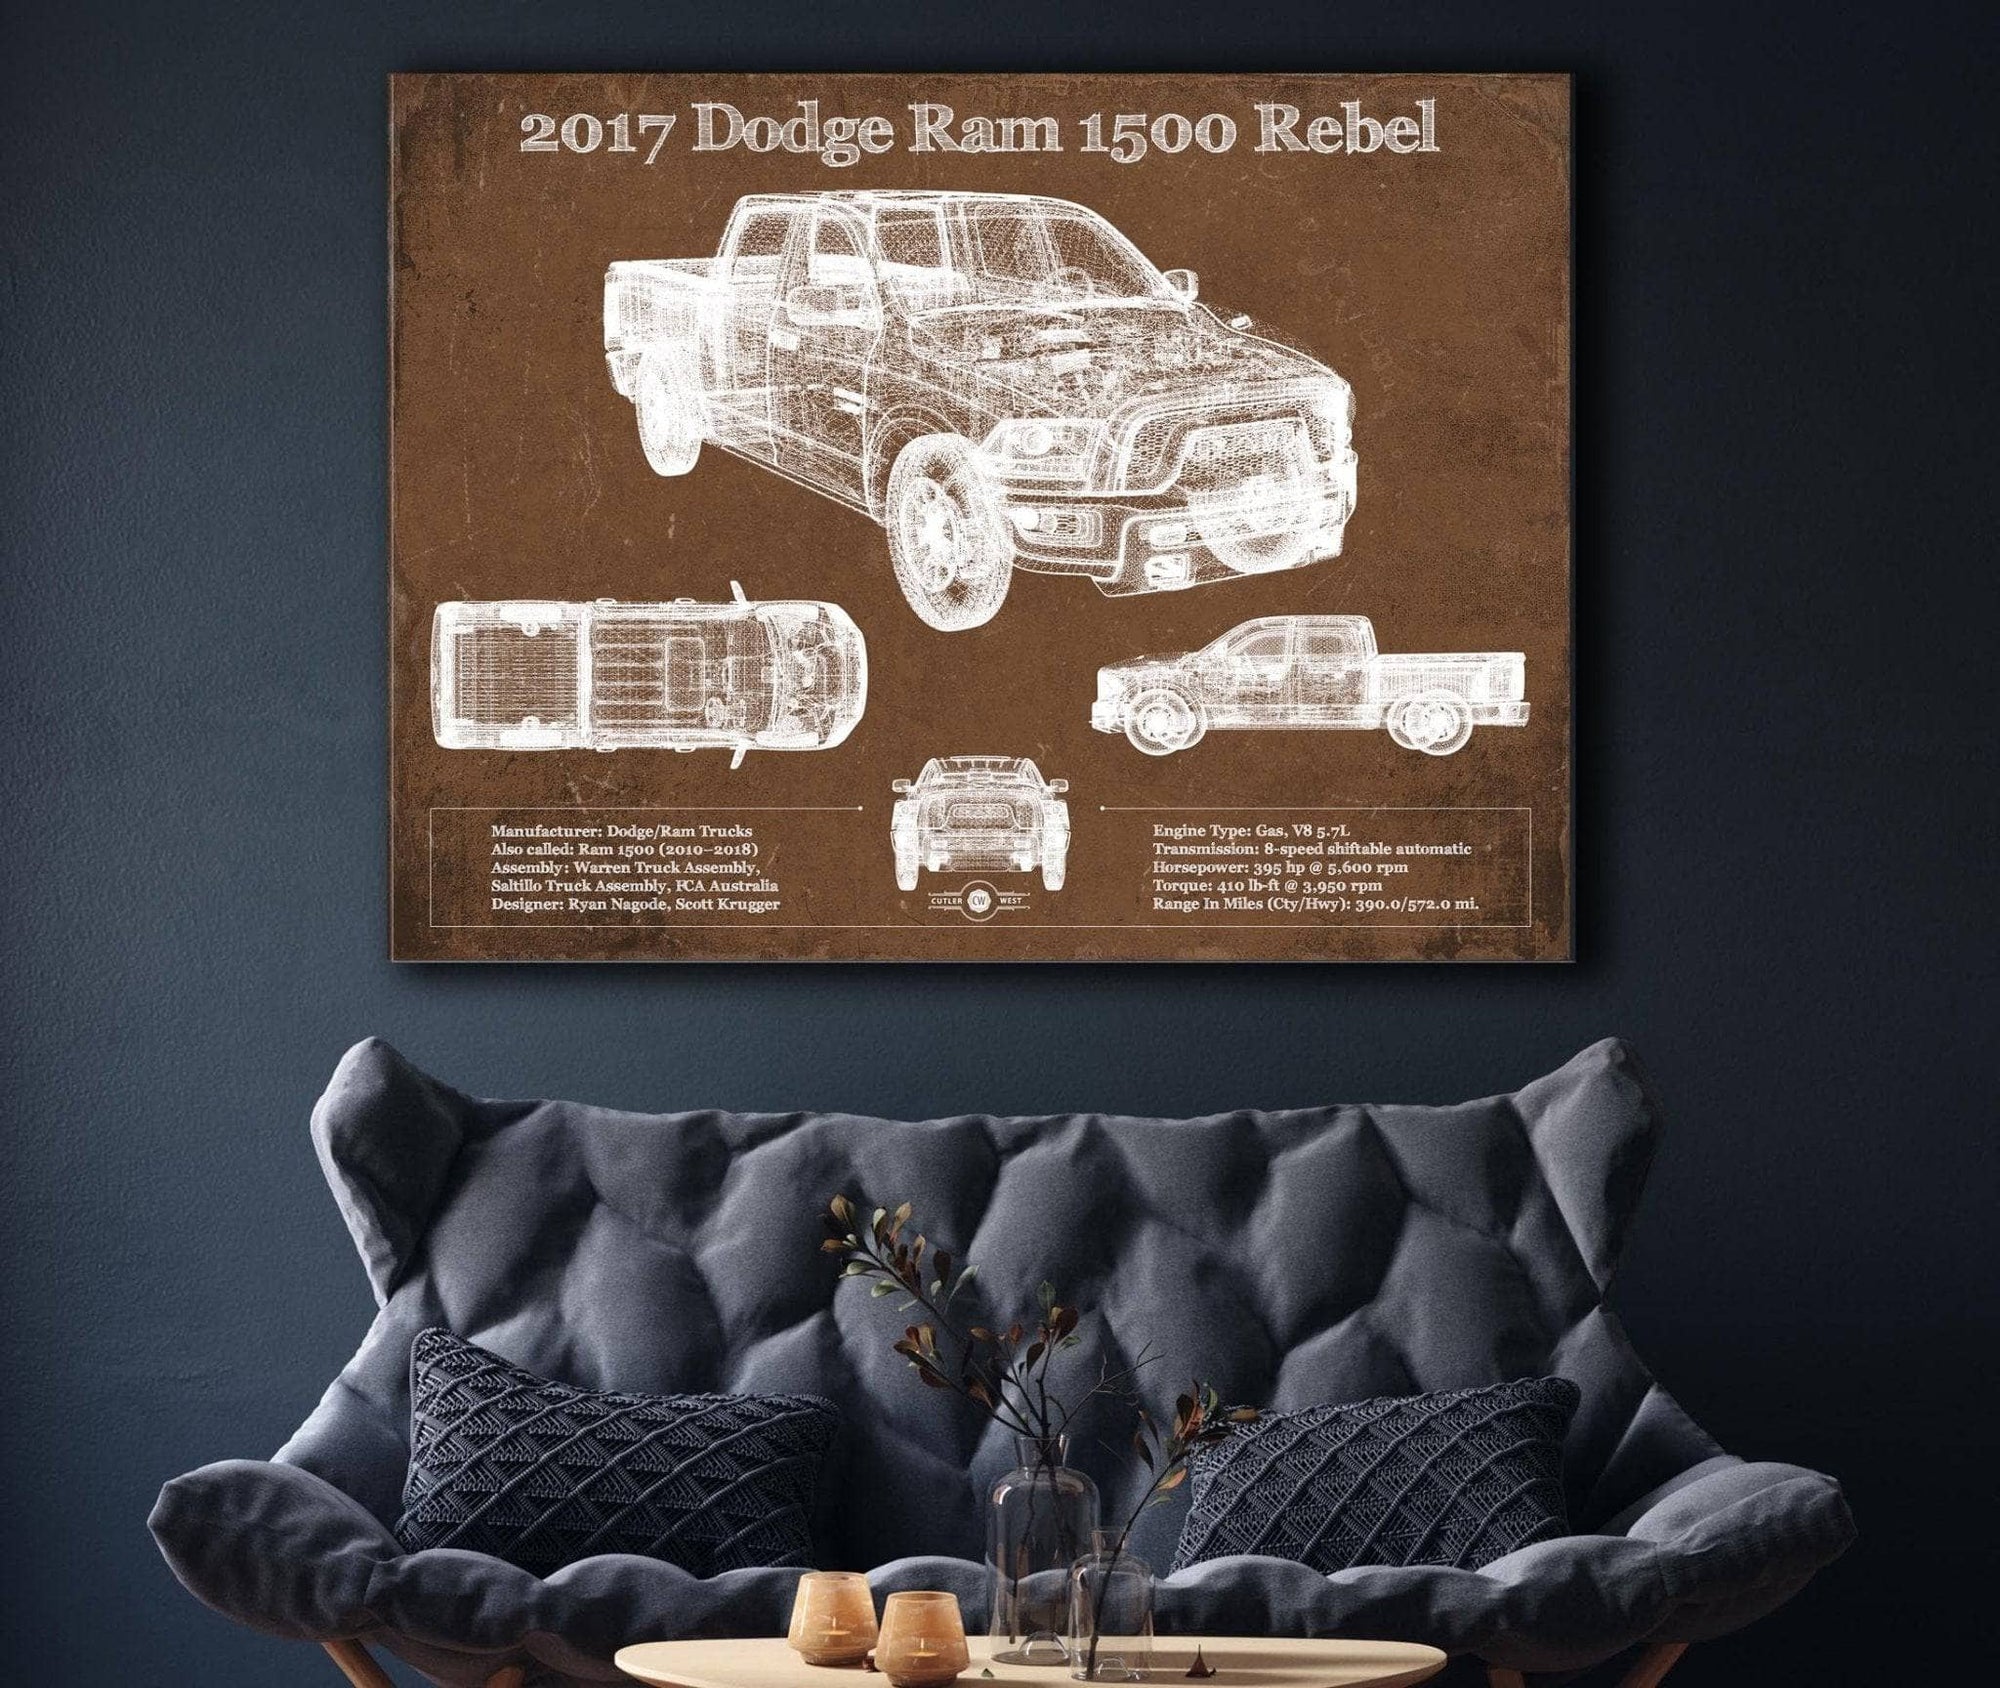 Cutler West Dodge Collection 2017 Dodge Ram 1500 Rebel Truck Vintage Blueprint Auto Print